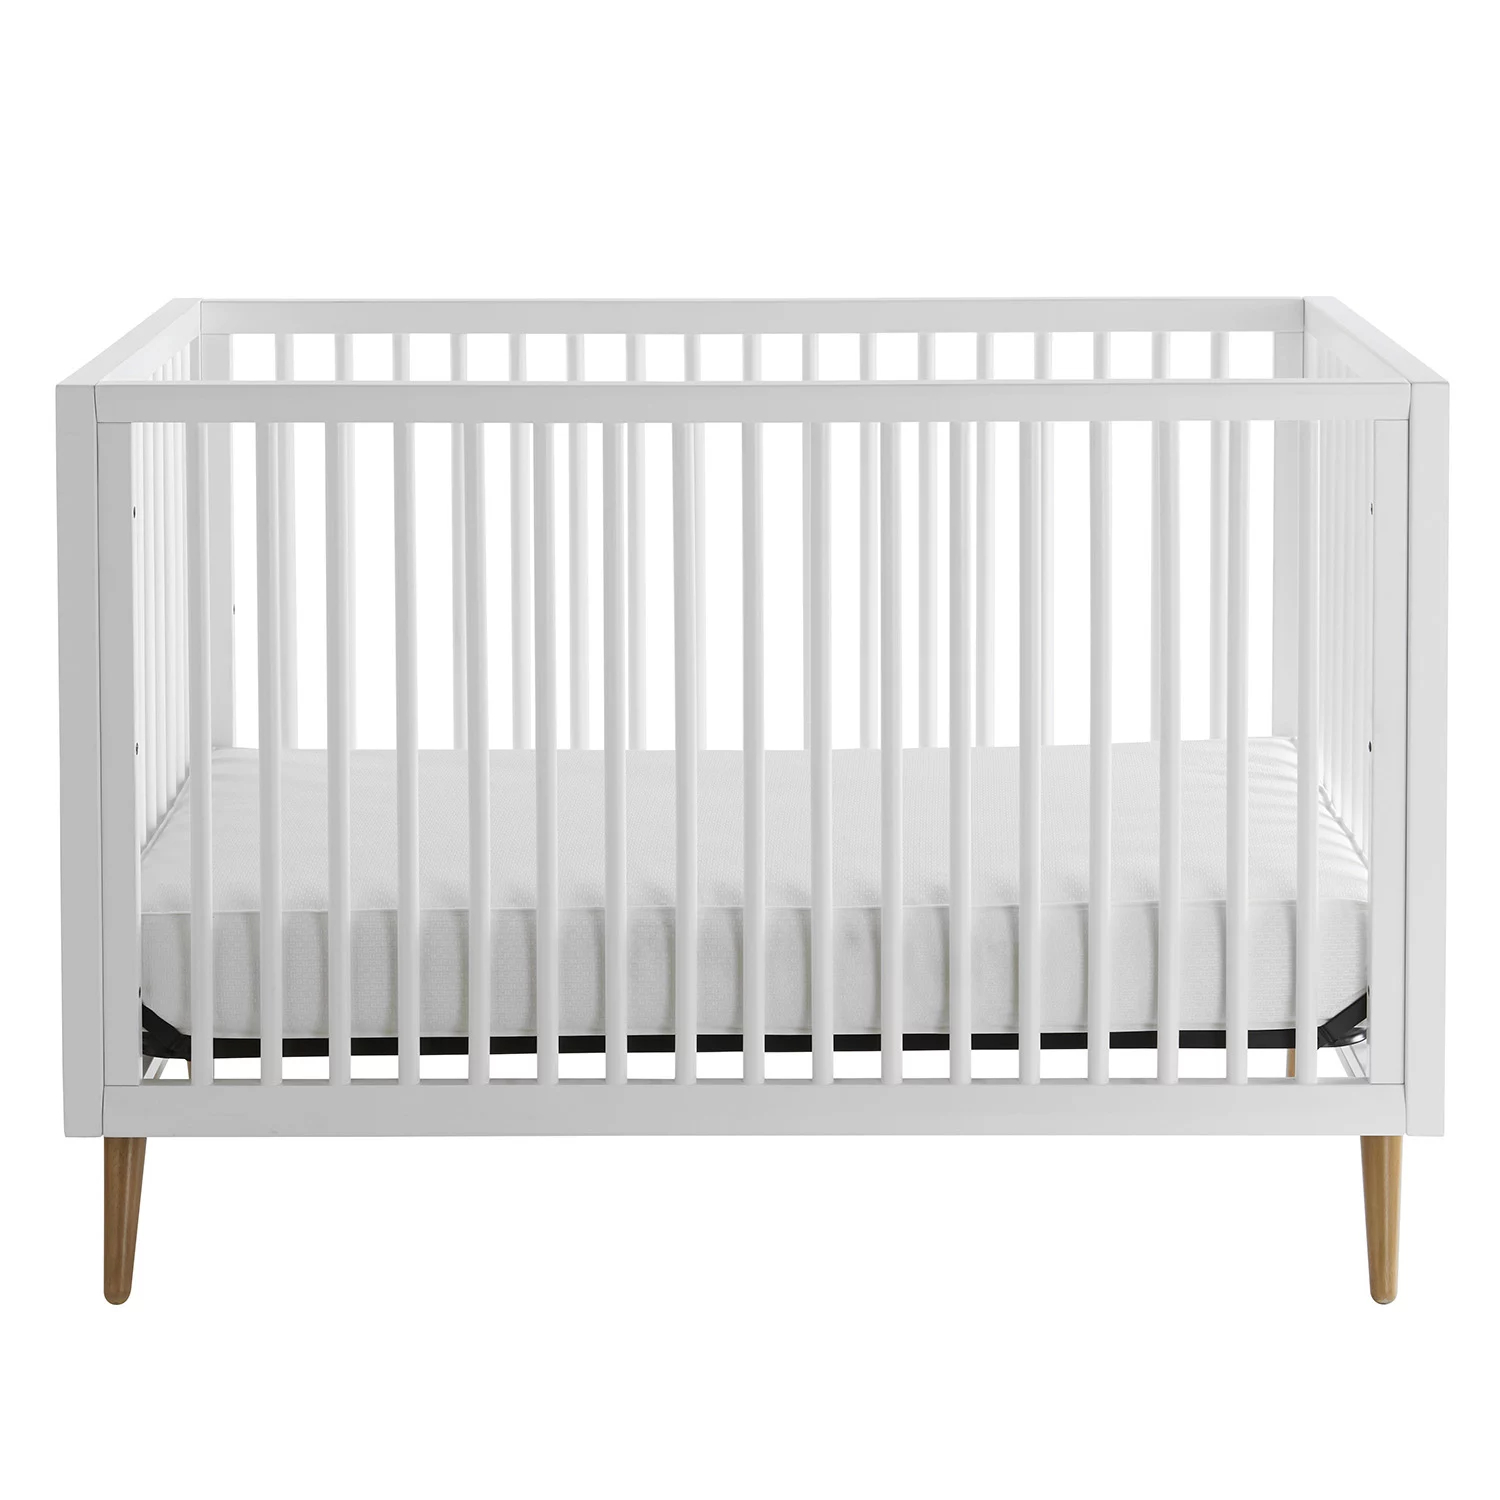 Factory made newborn crib bed luxury wooden modern baby cribs (1).jpg